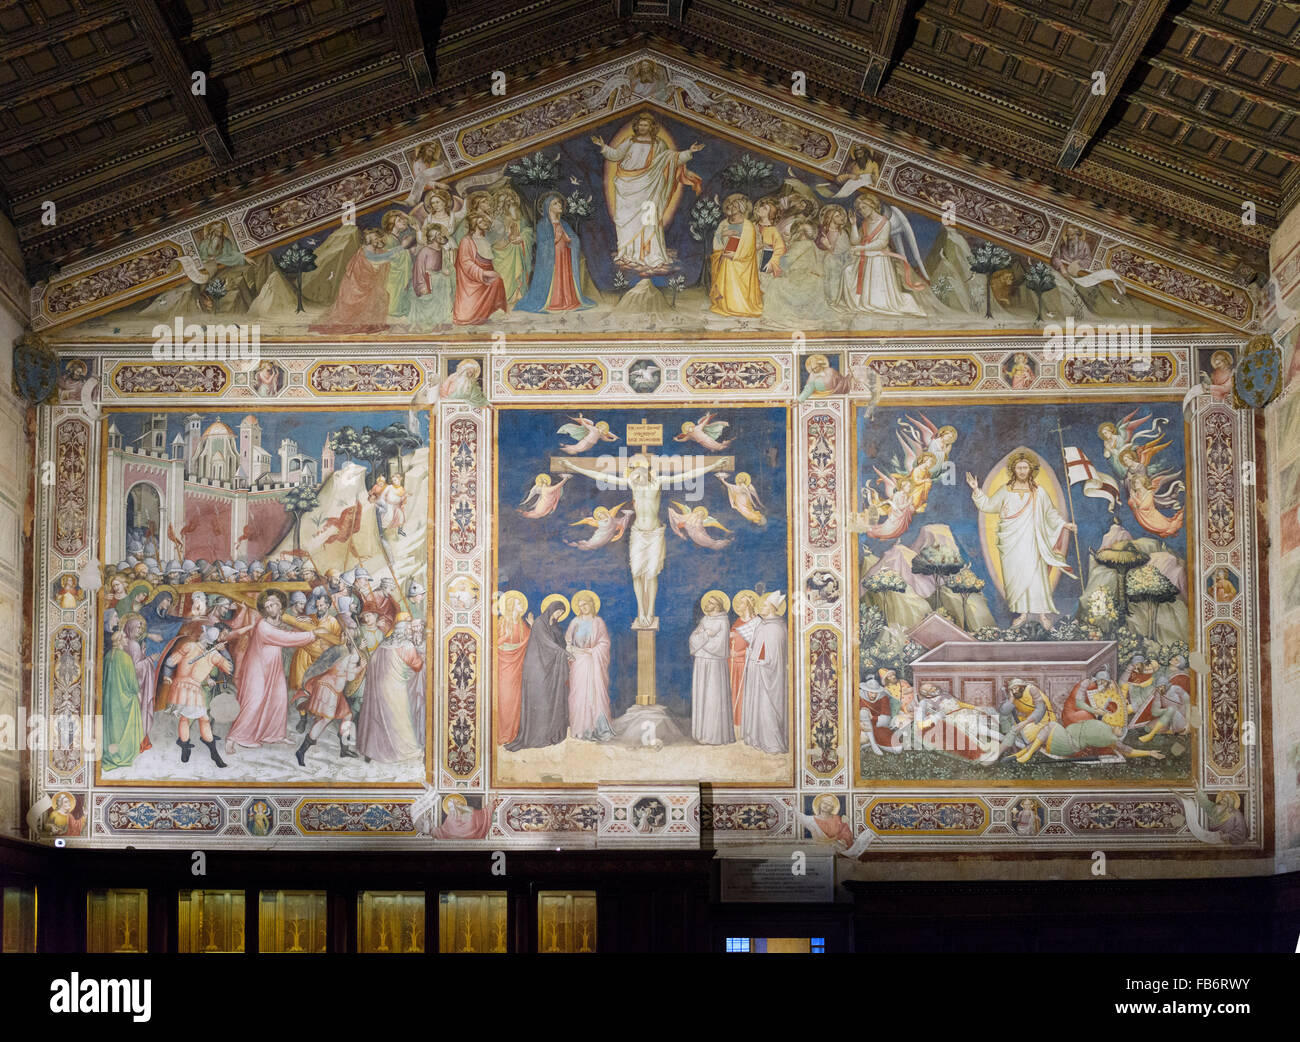 Florence. Italy. The Crucifixion, fresco, (ca. 1360) by Taddeo Gaddi, fresco in the Sacristy, Basilica of Santa Croce. Stock Photo